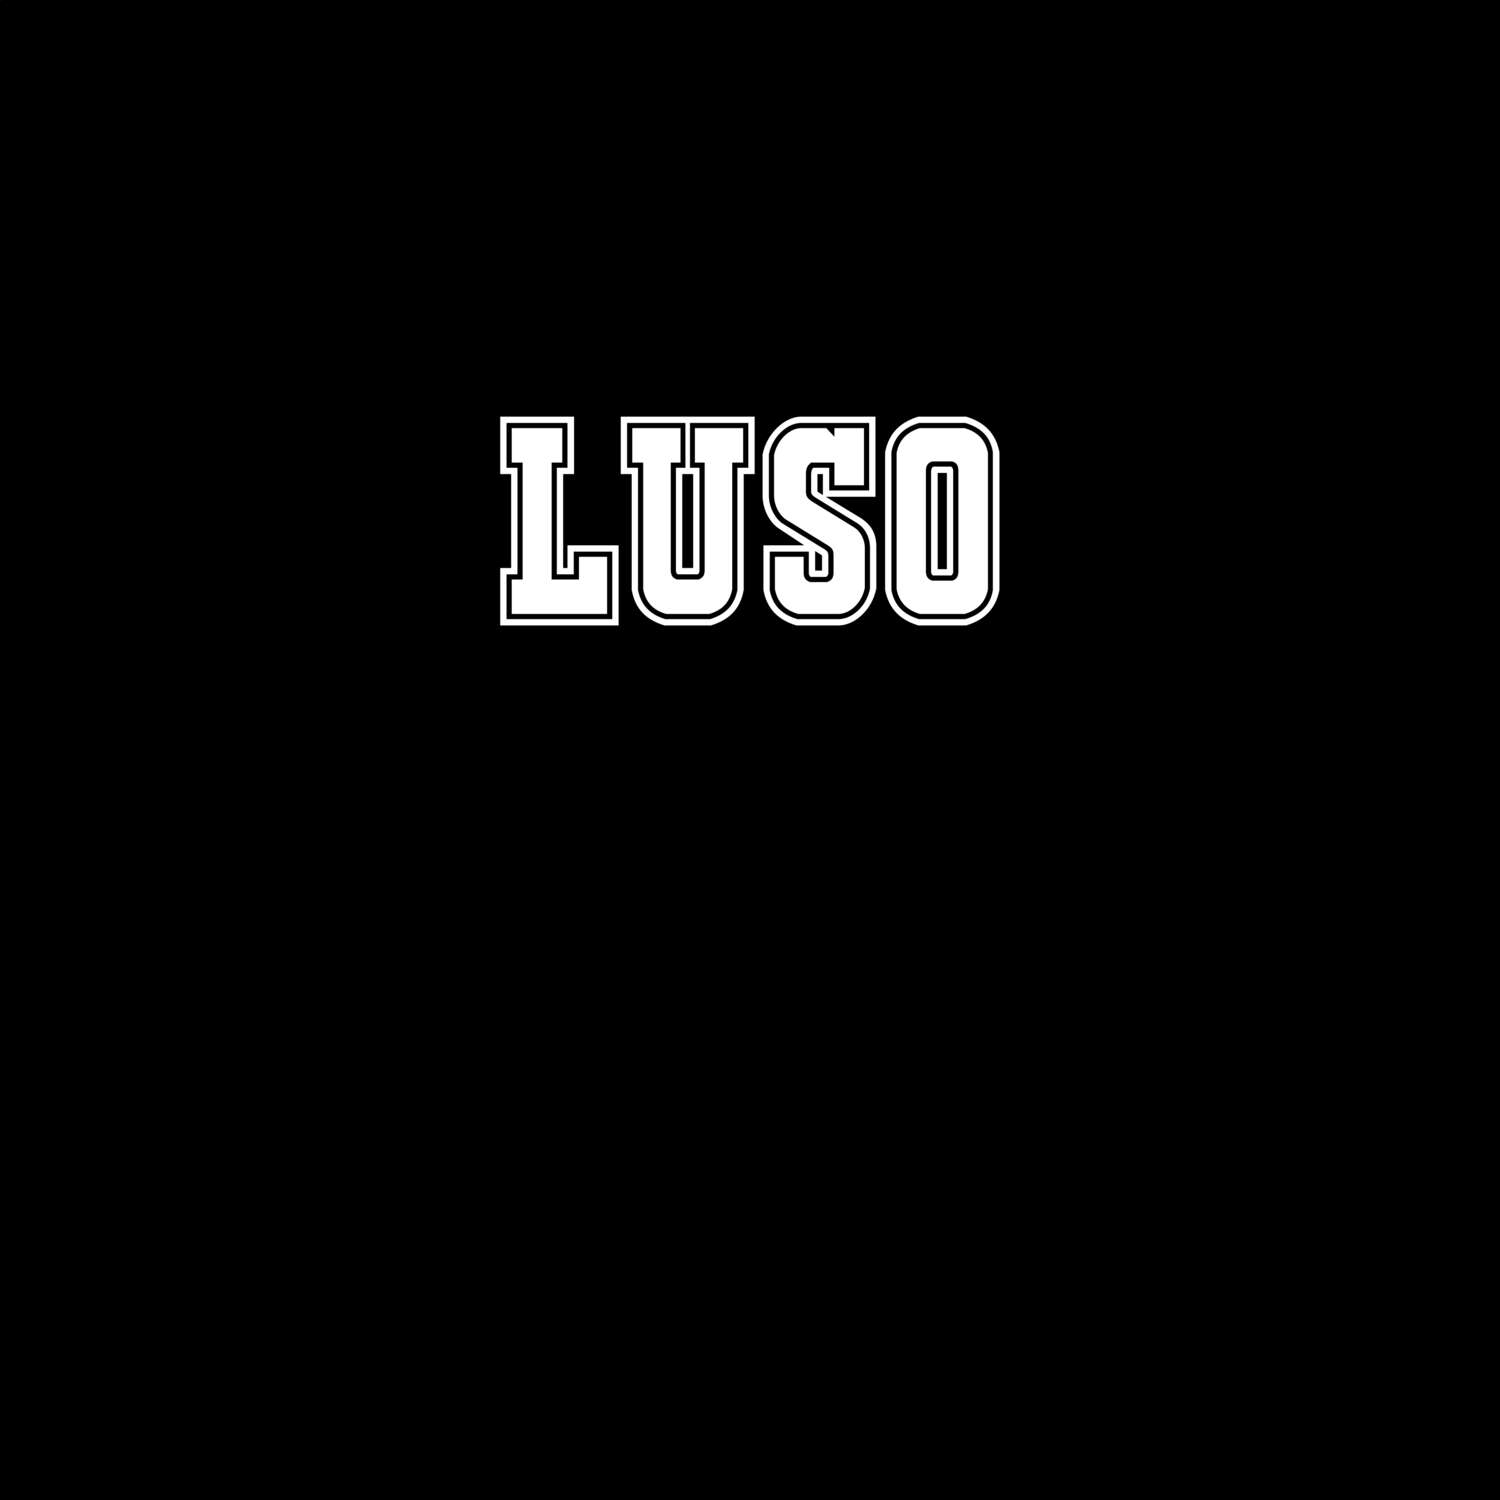 Luso T-Shirt »Classic«